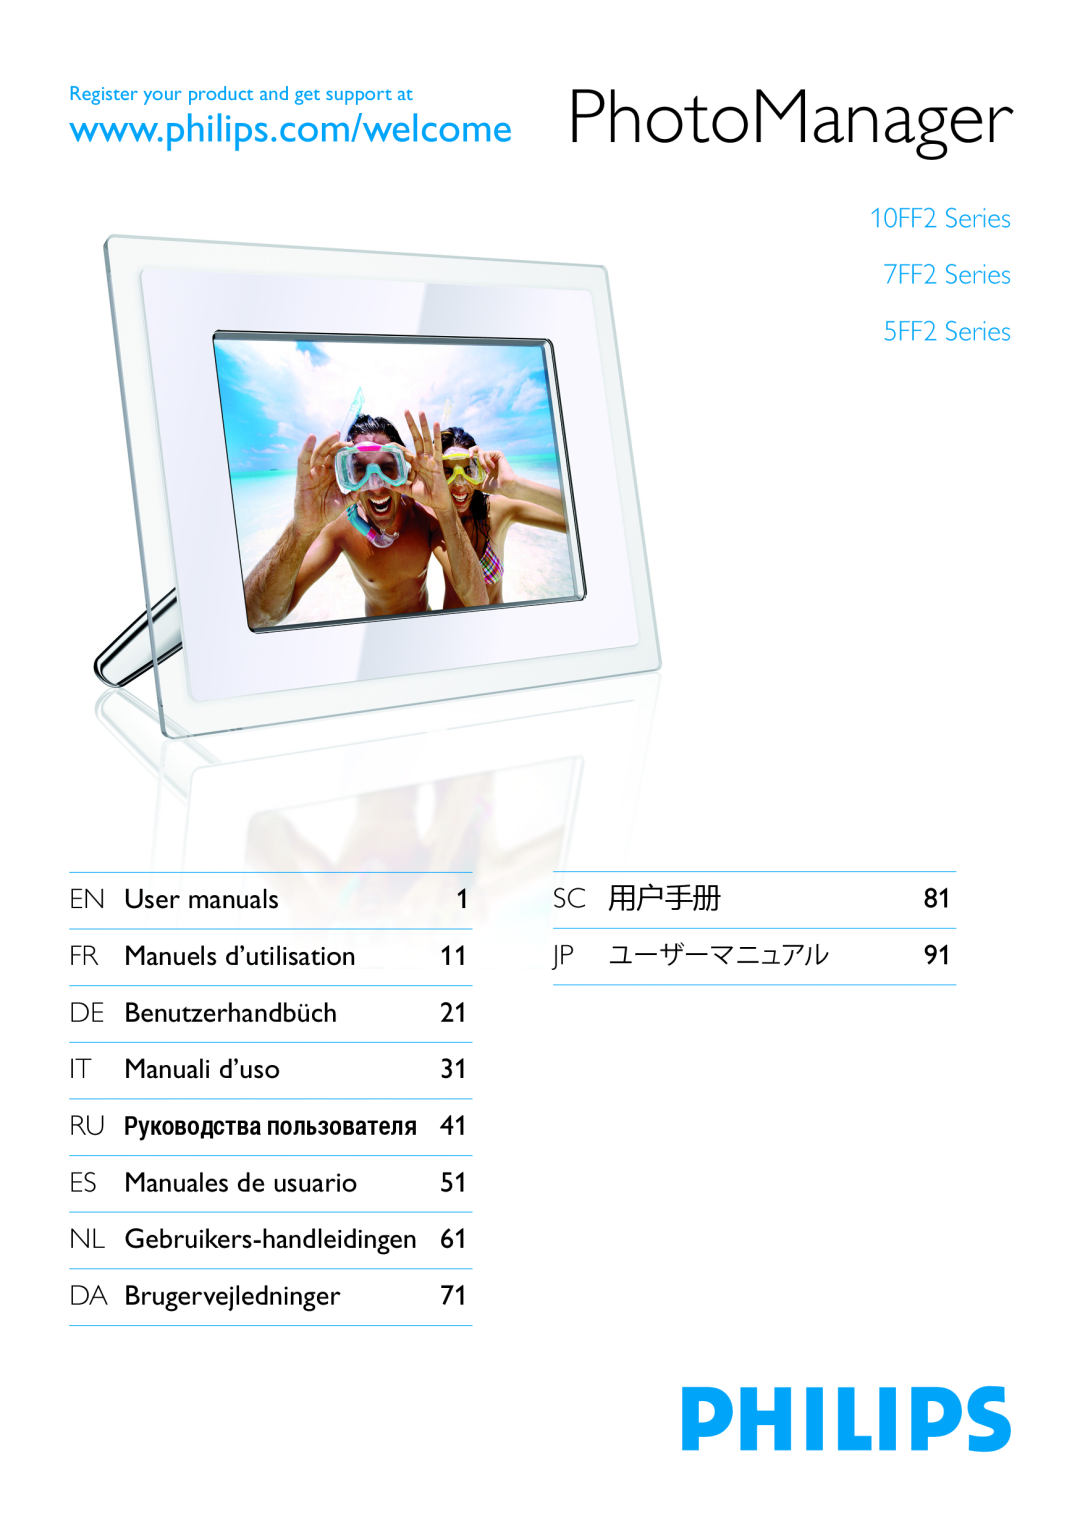 Philips manual PhotoFrame, 10FF2 Series, 7FF2 Series, 5FF2 Series, Jp ユーザーマニュアル 